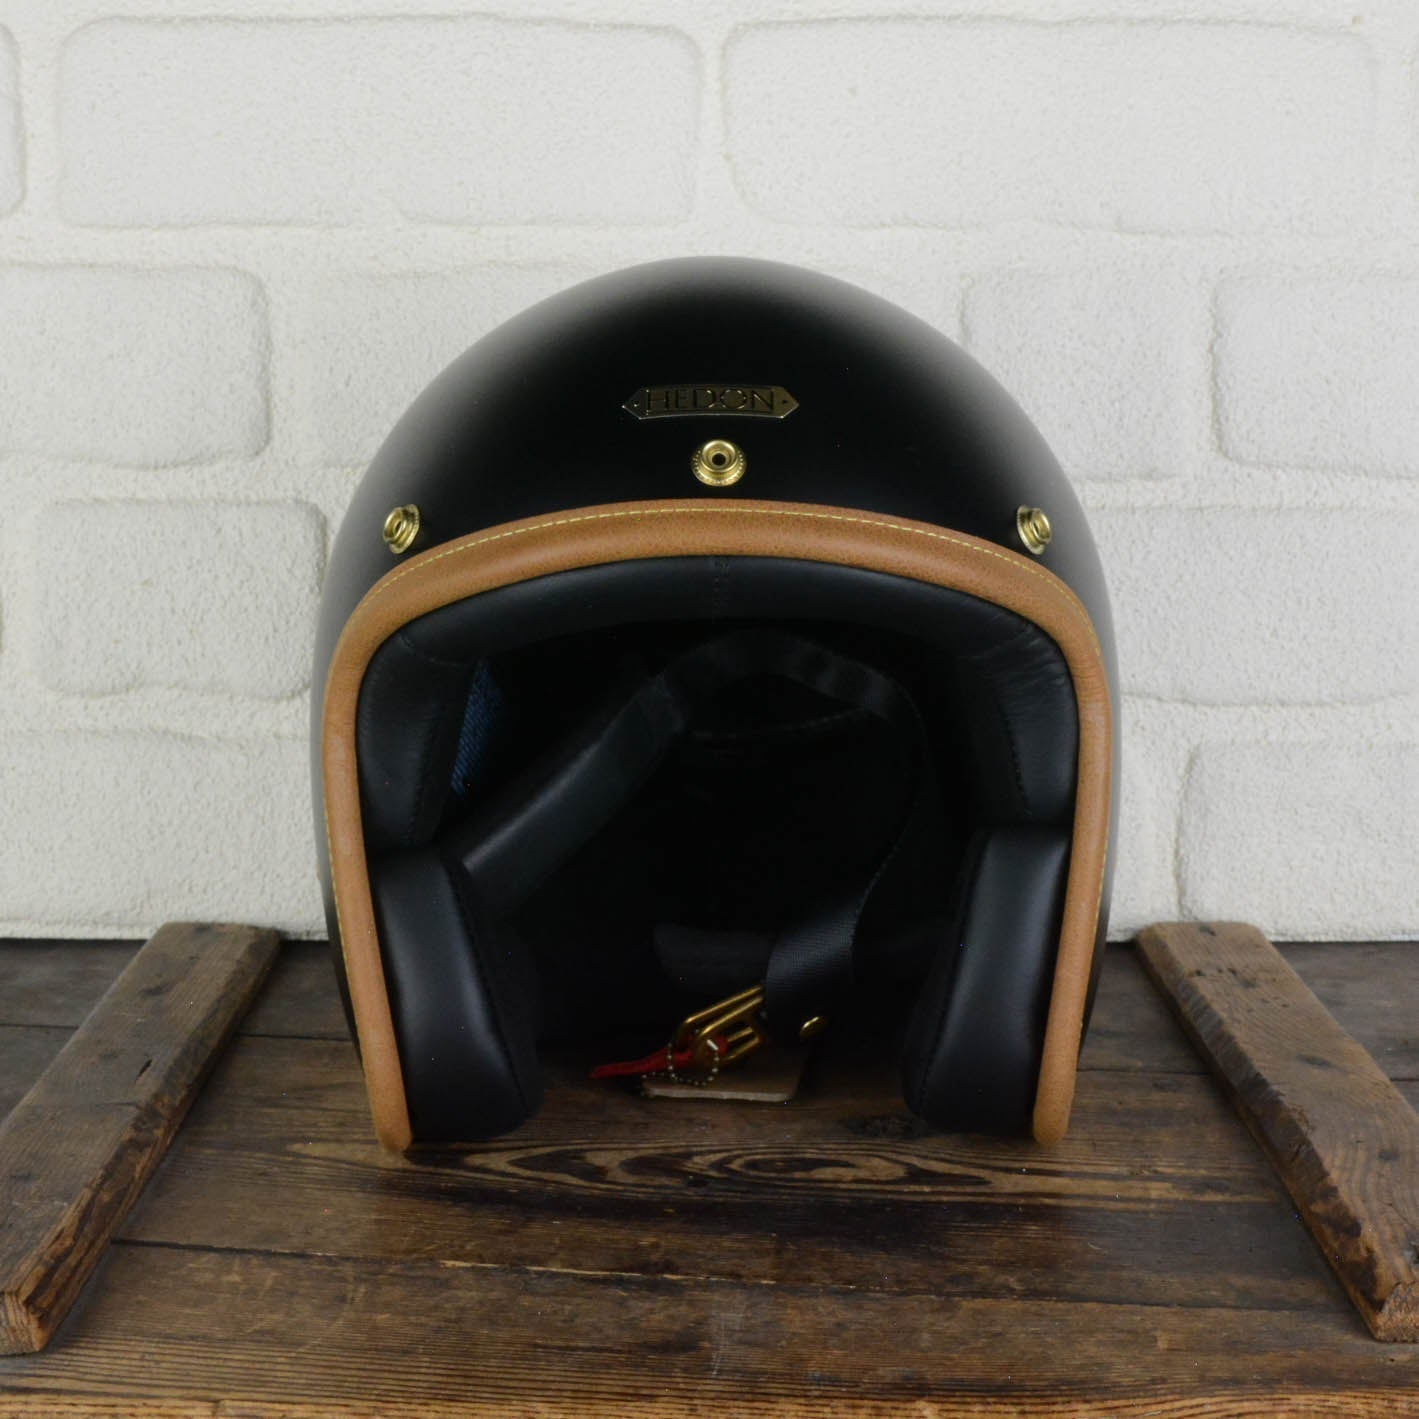 Jet Custom Motorcycle Helmet Originally FIRST COSMO Shiny Black For Sale  Online 